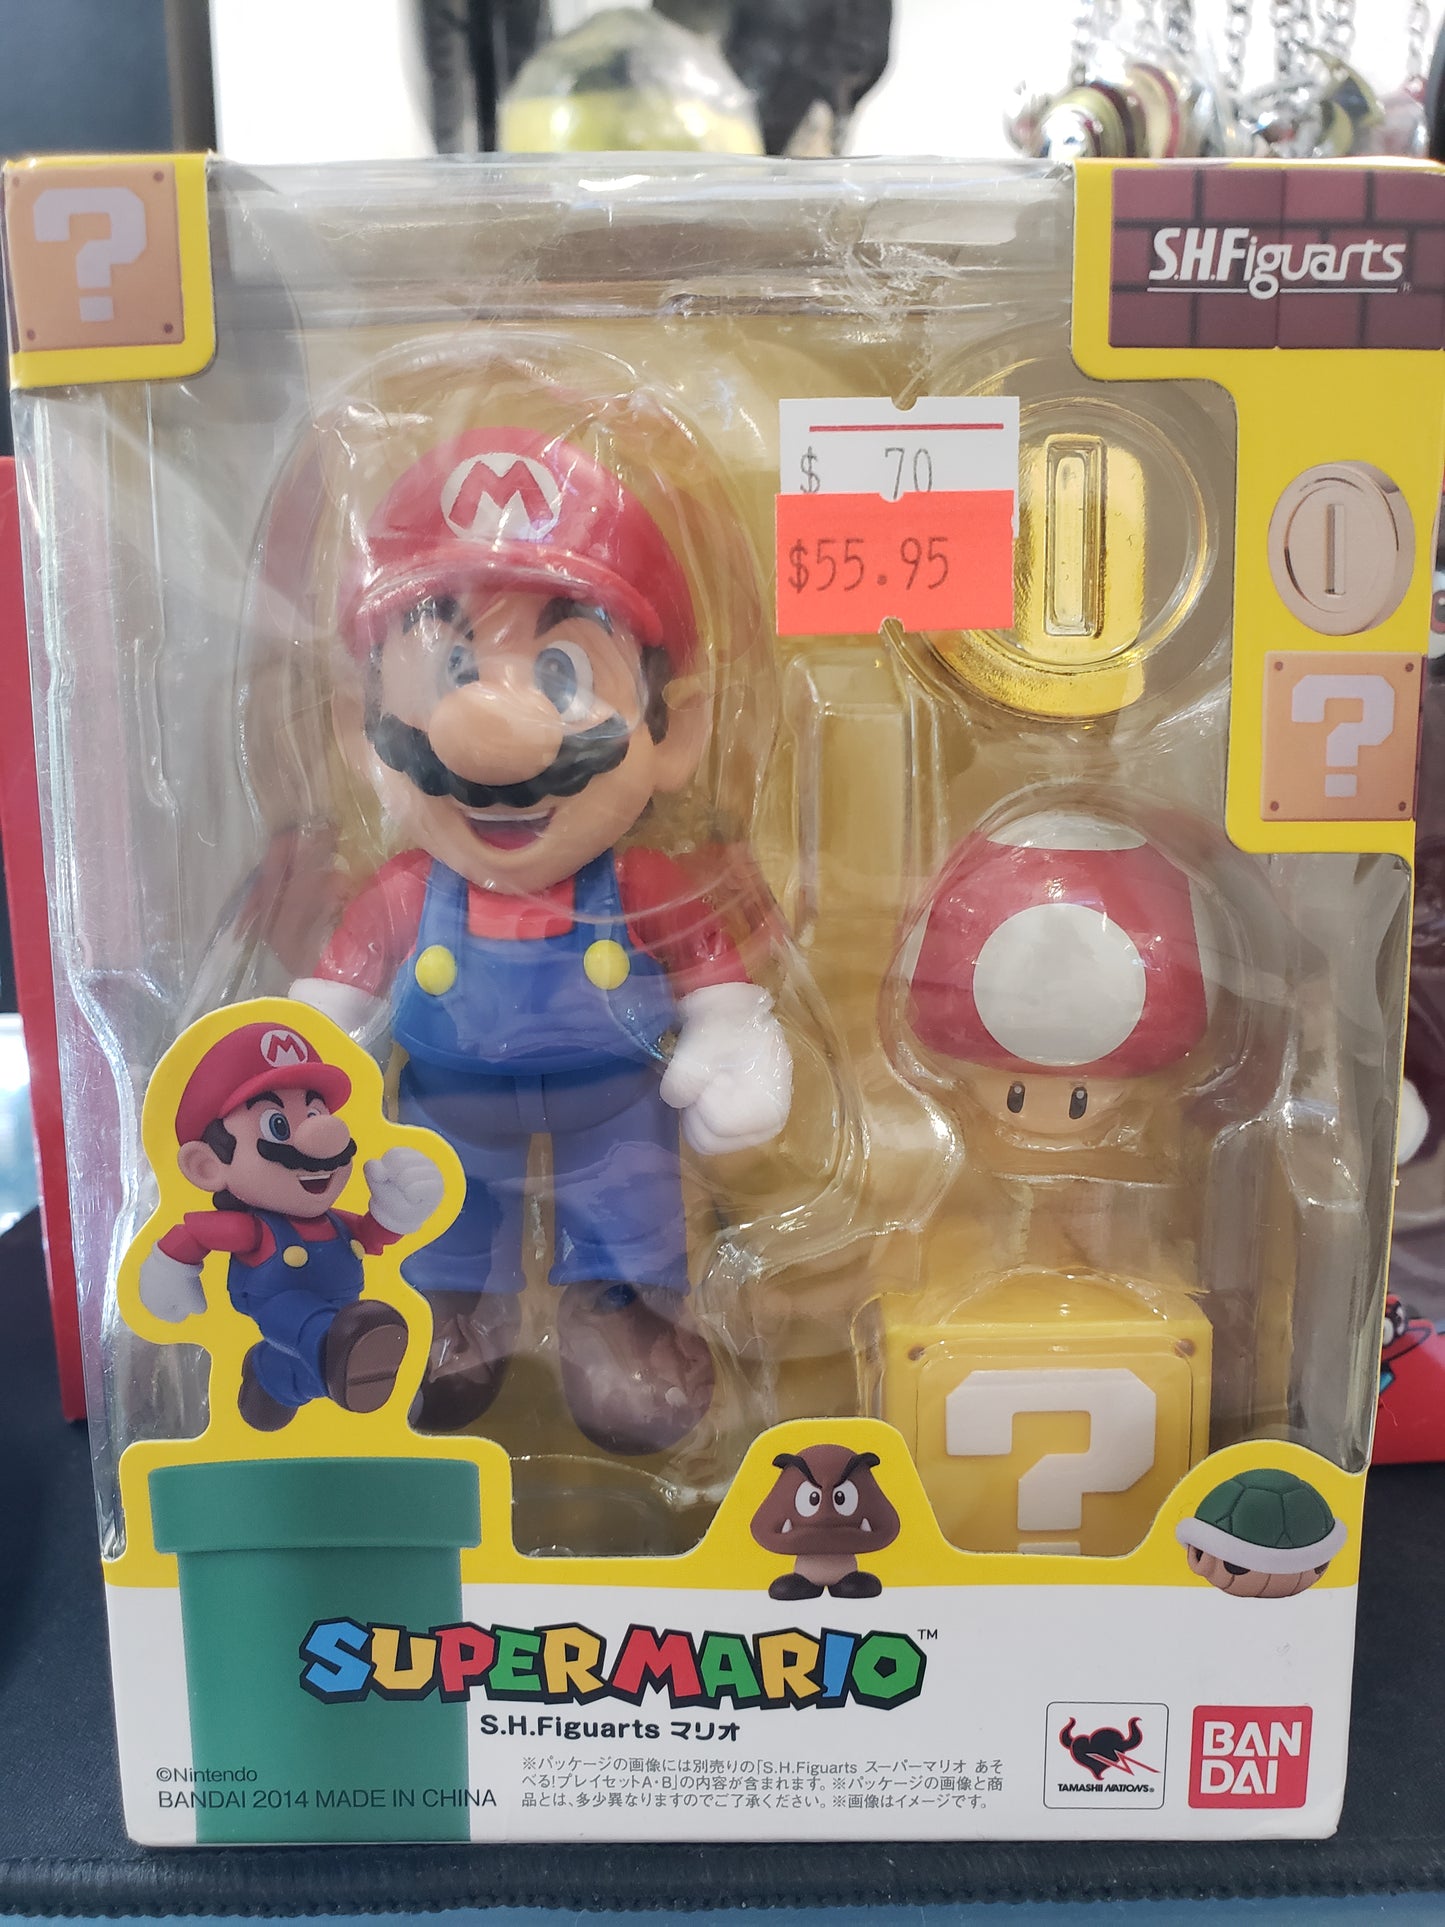 S.H.Figuarts Super Mario Action Figure [JPN IMPORT]